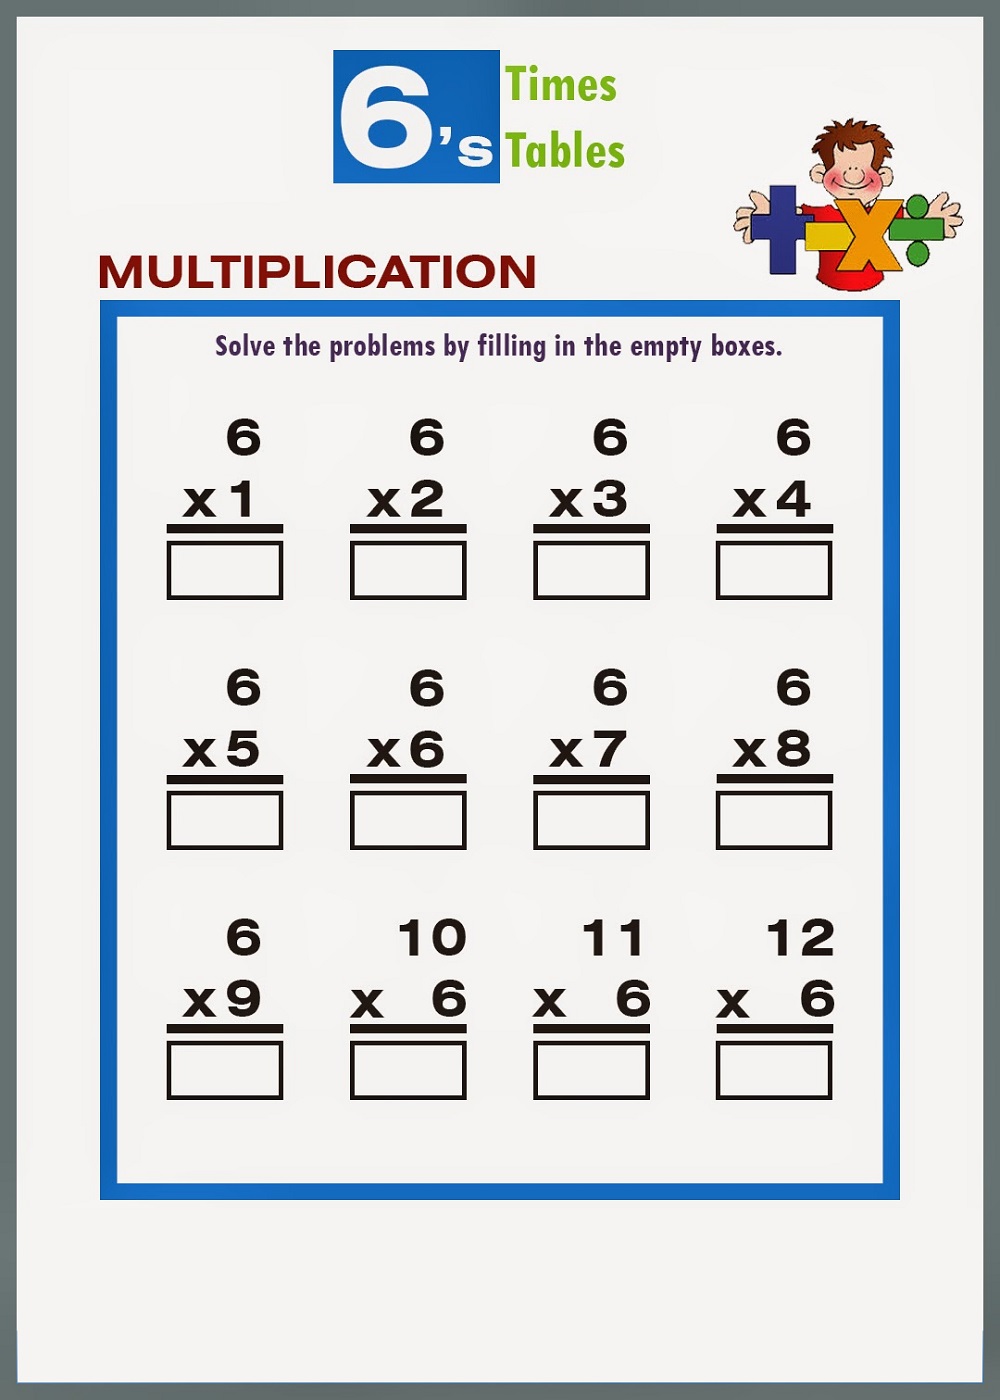 6 times tables multiplication worksheets